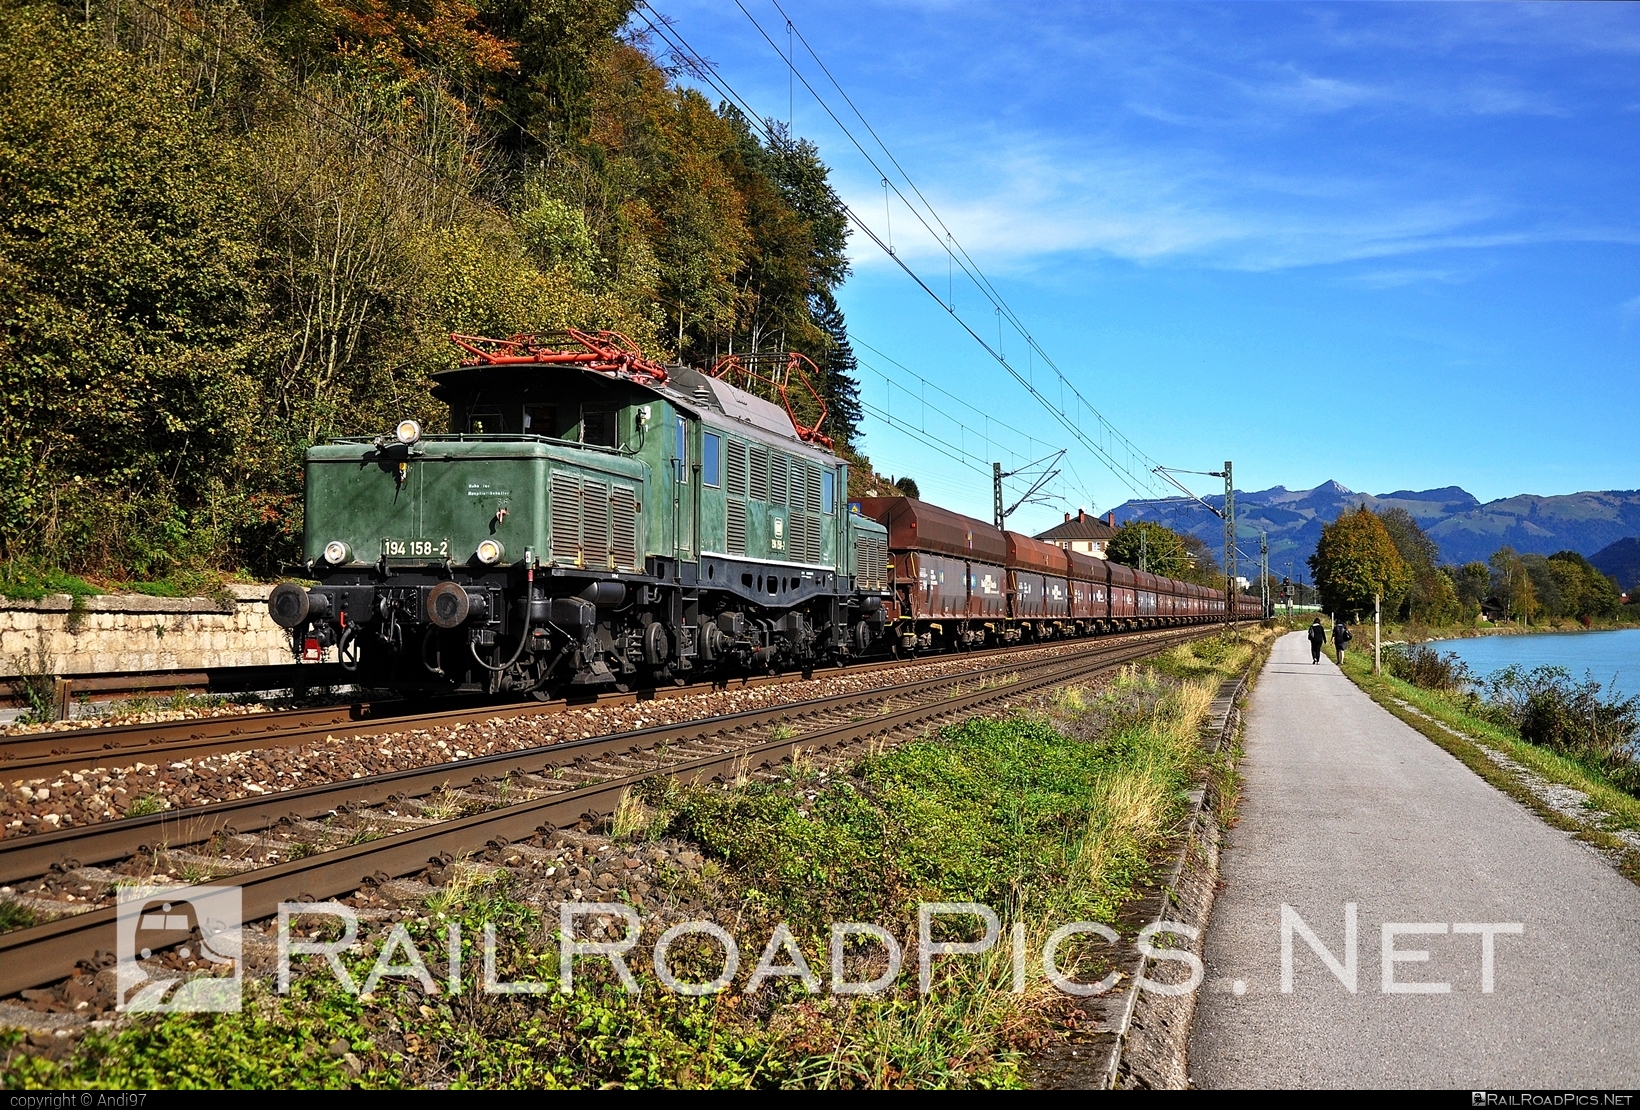 DRG Class E 94 - 194 158-2 operated by Rail 4U-Eisenbahndienstleistungen #drgClassE94 #grunesKrokodil #hopperwagon #rail4u #railu